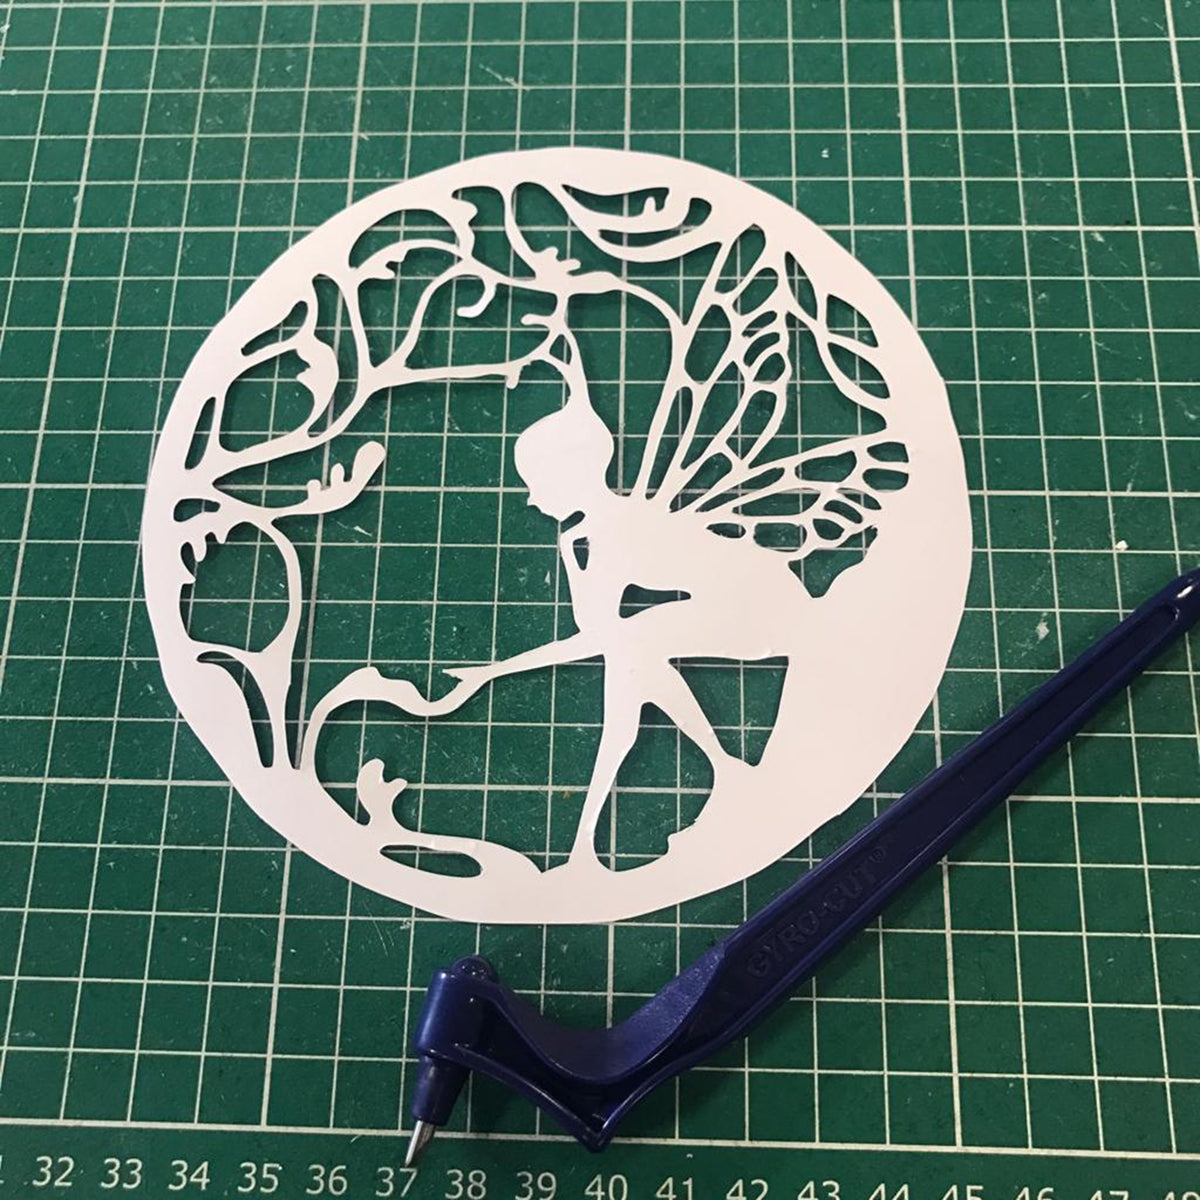 Gyro Cut Paper Cutting Kit | Value Bundle